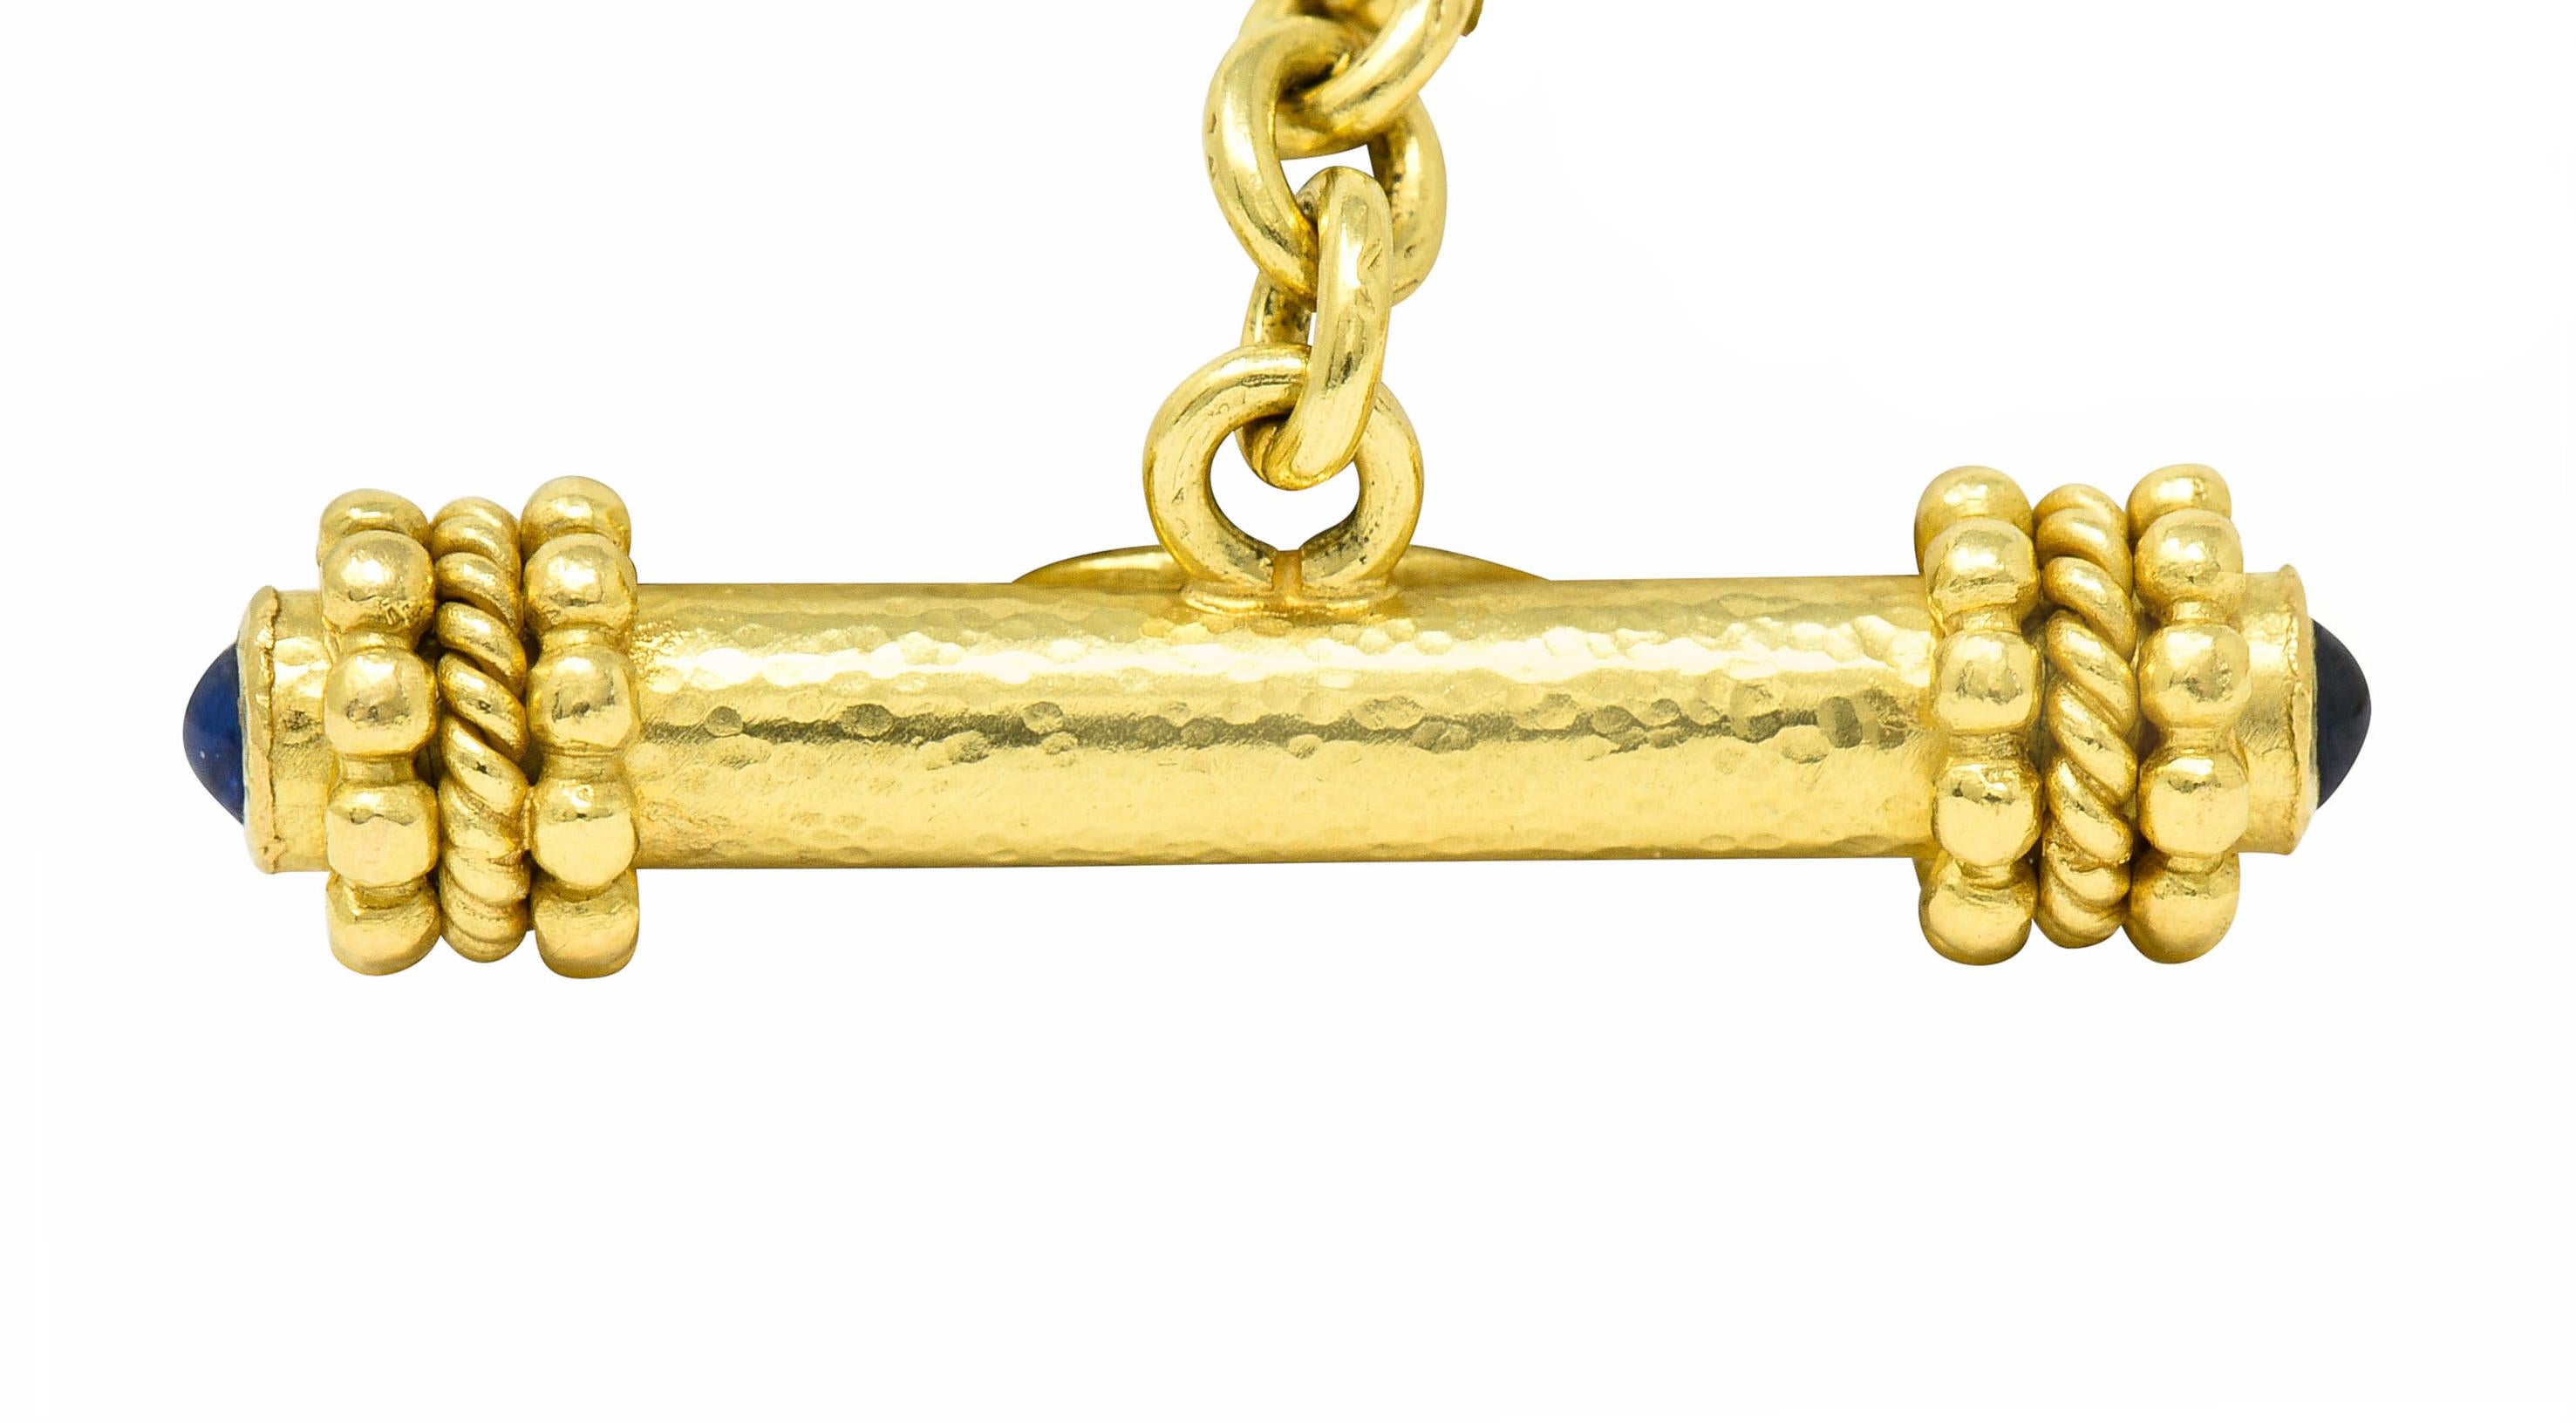 Cabochon Elizabeth Locke Sapphire 18 Karat Gold Substantial Curb Link Chain Necklace